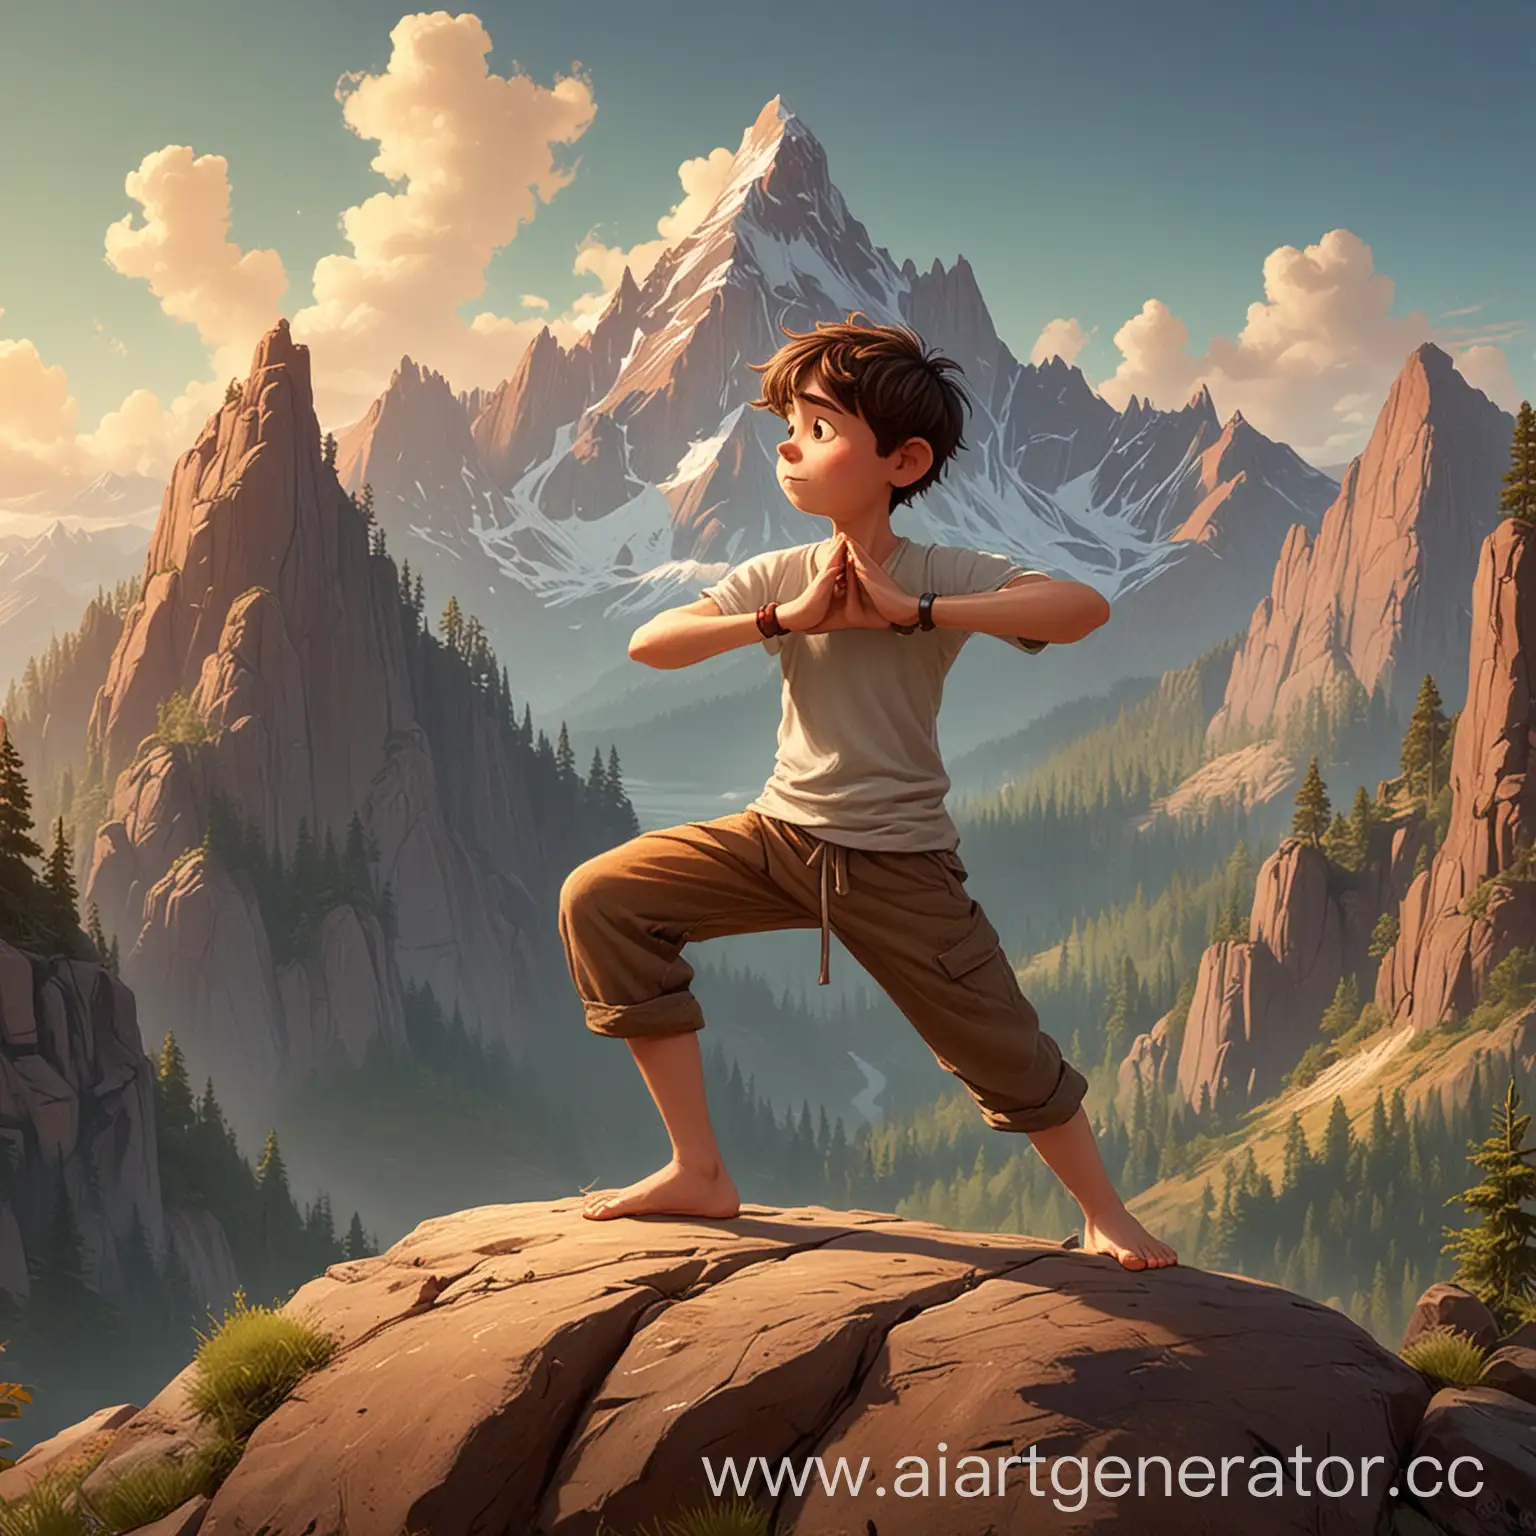 Boy-Practicing-Yoga-Pose-in-Mountain-Setting-Pixar-Style-Artwork